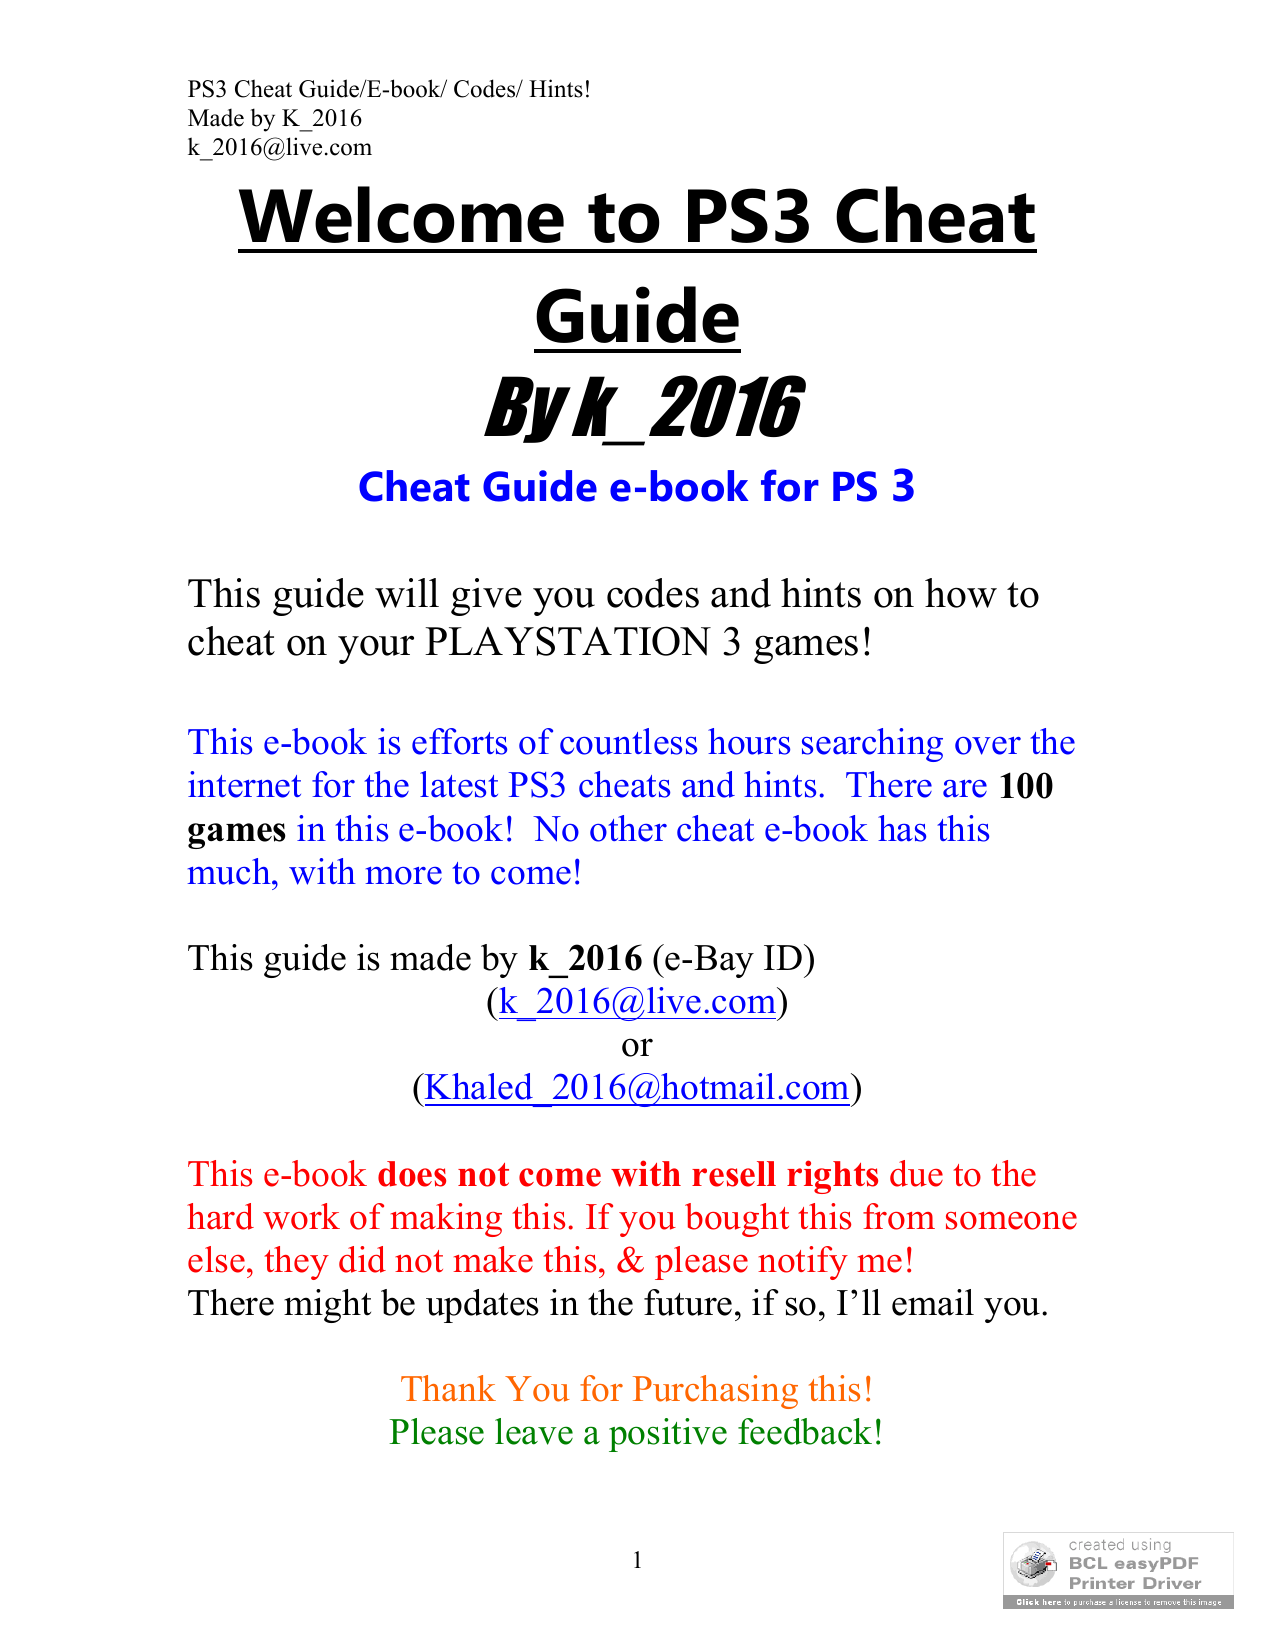 PS3 Cheat E-book- 100 games | manualzz.com - 